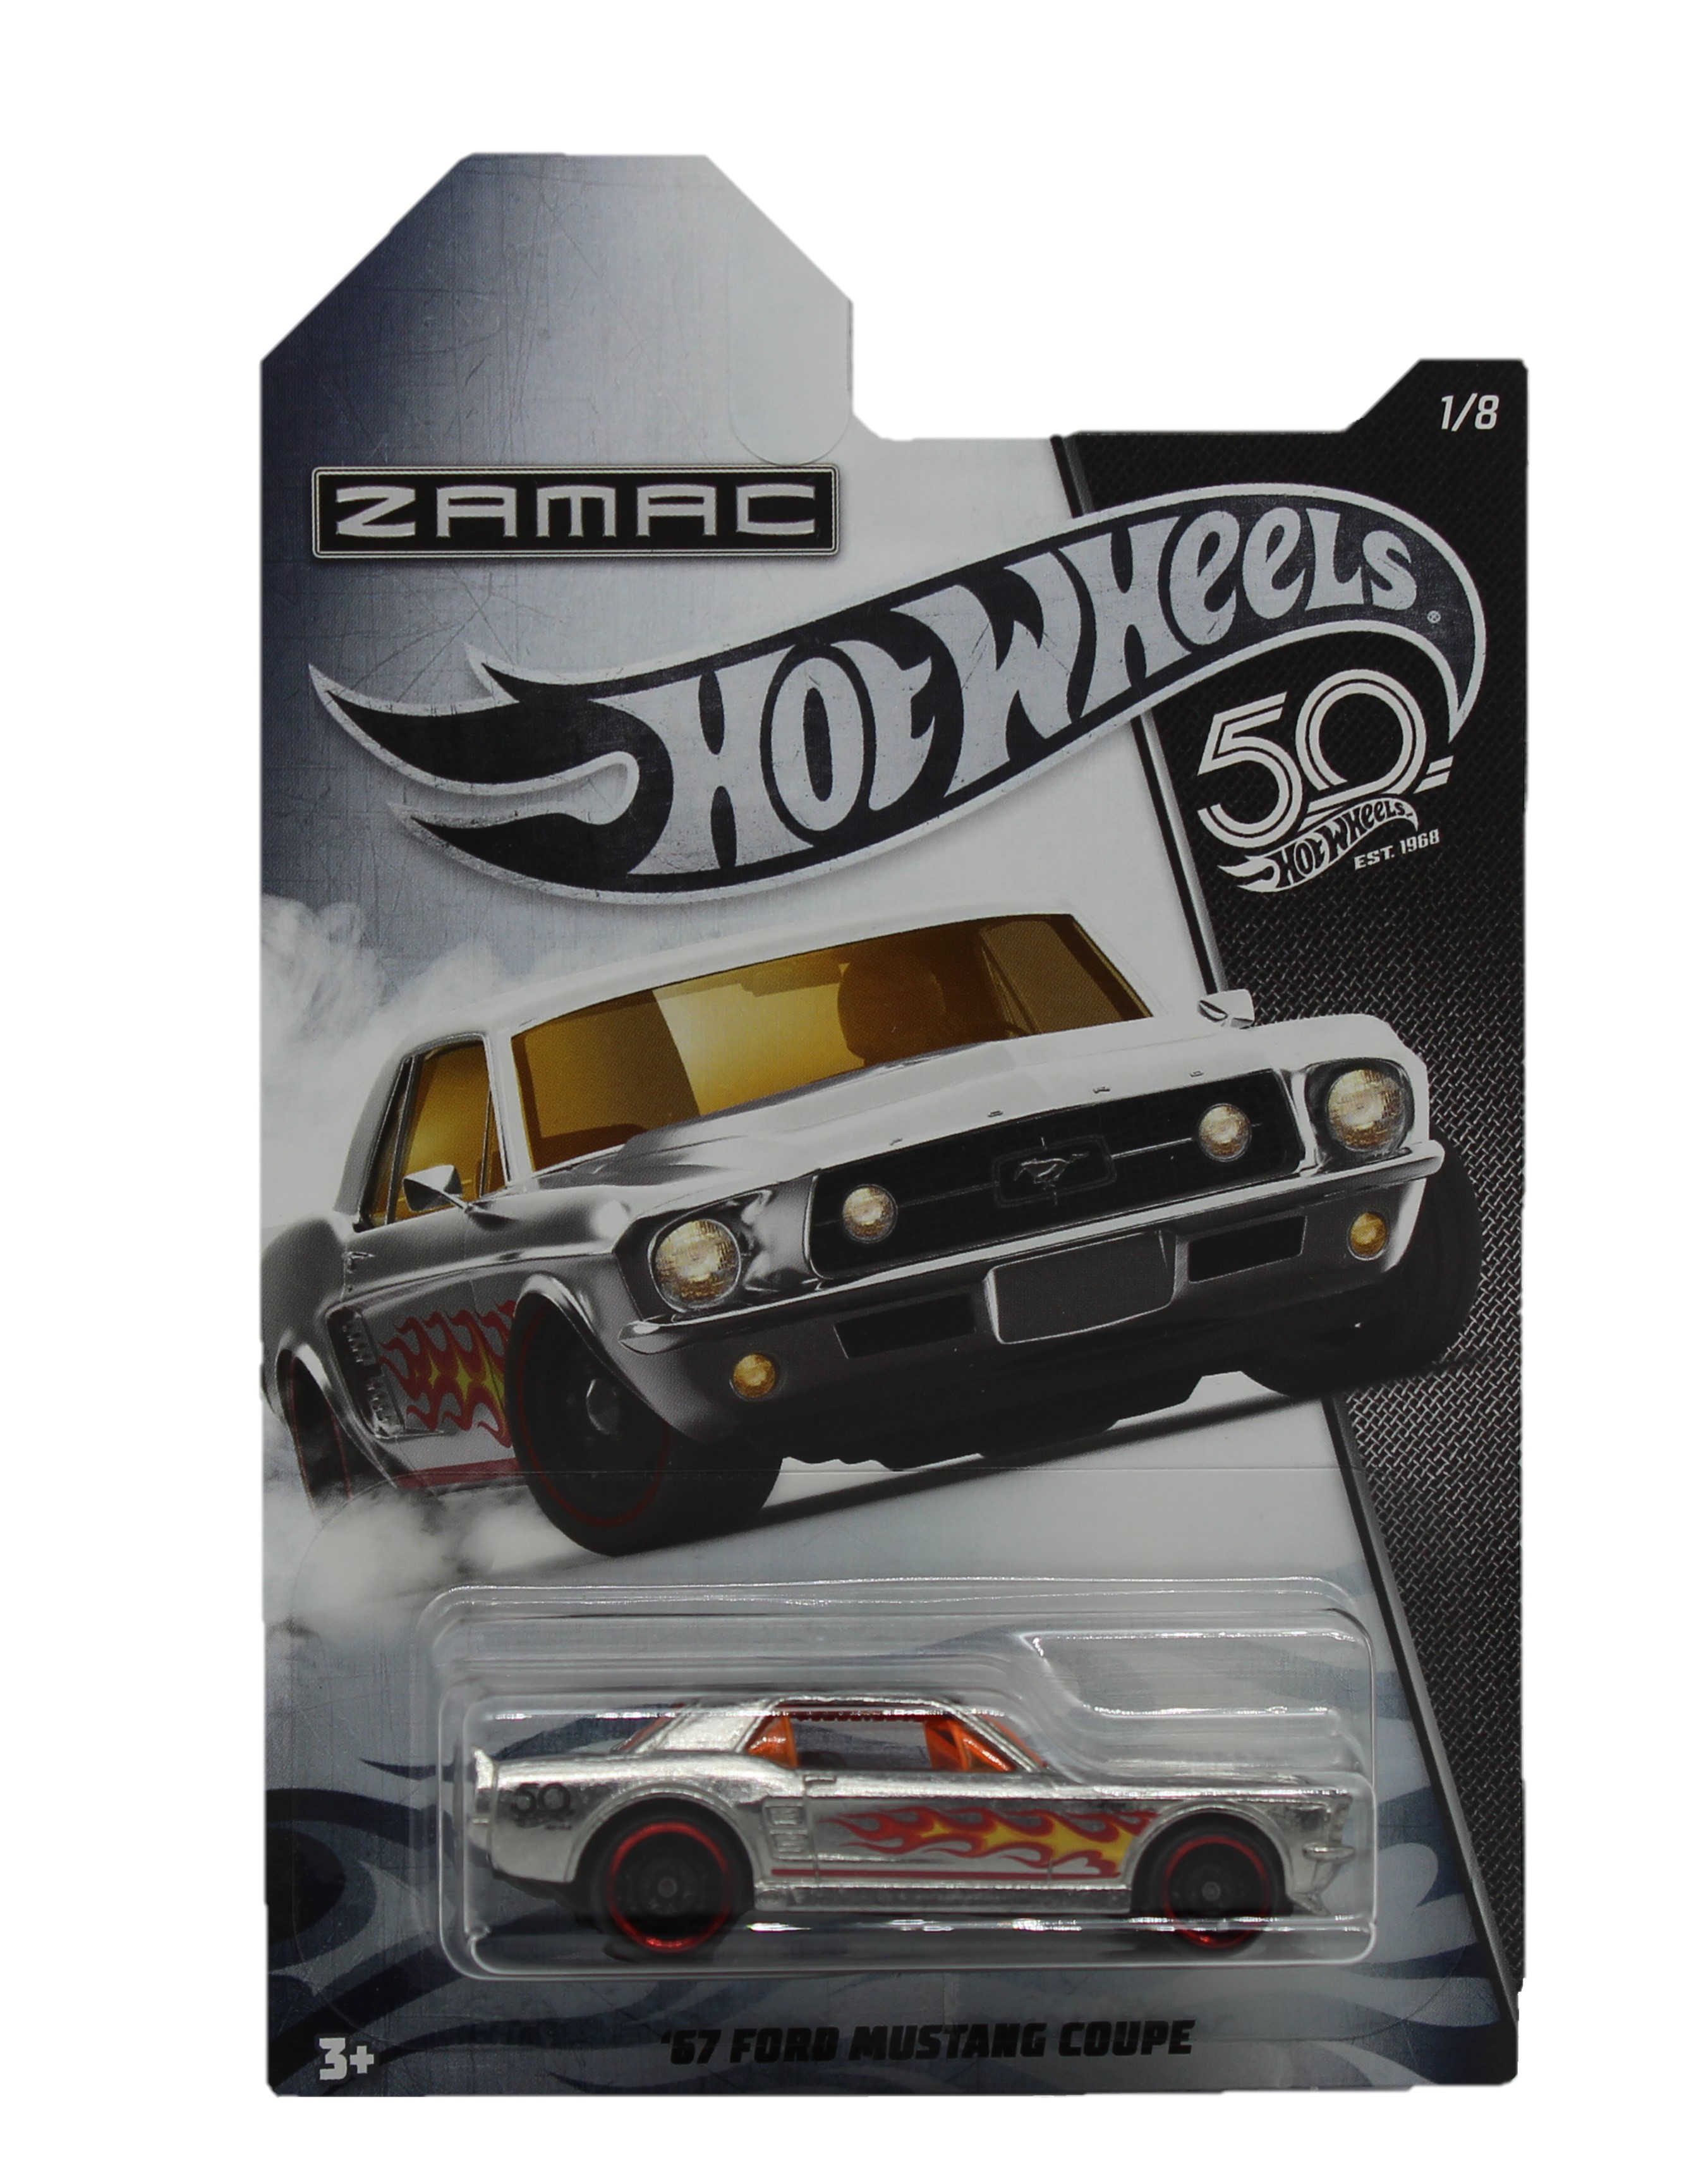 Hot Wheels 50th Anniversary Zamac Modellauto ´67 Ford Mustang Coupe